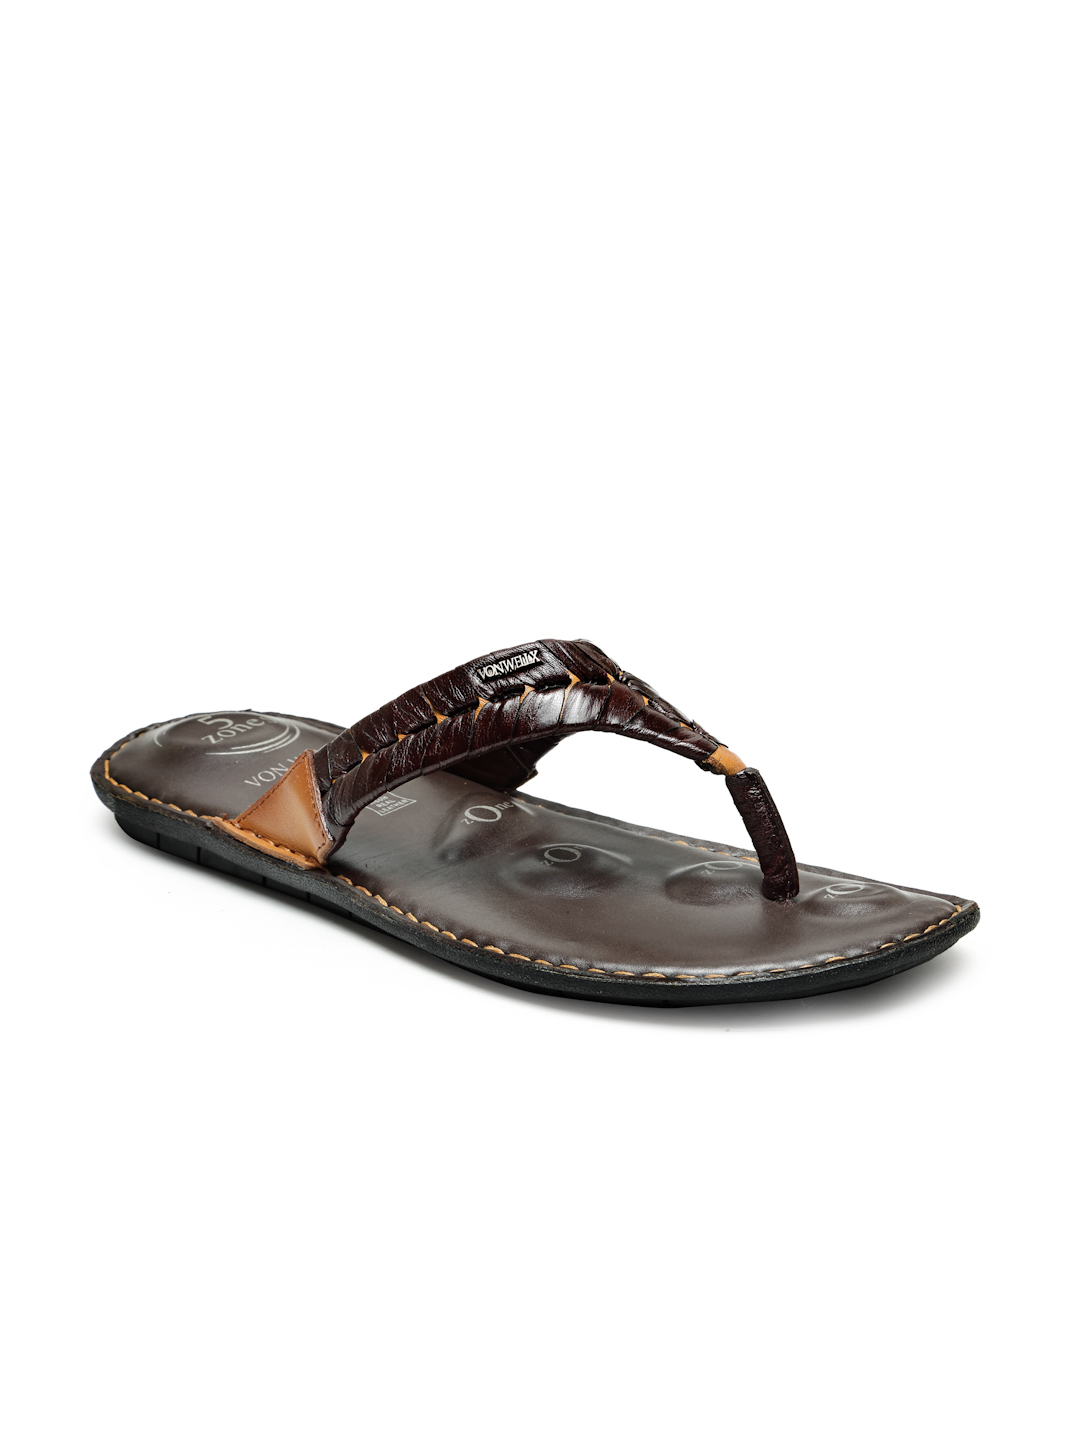 Buy Von Wellx Germany Comfort Men's Tan Slippers Alonso Online in Dubai